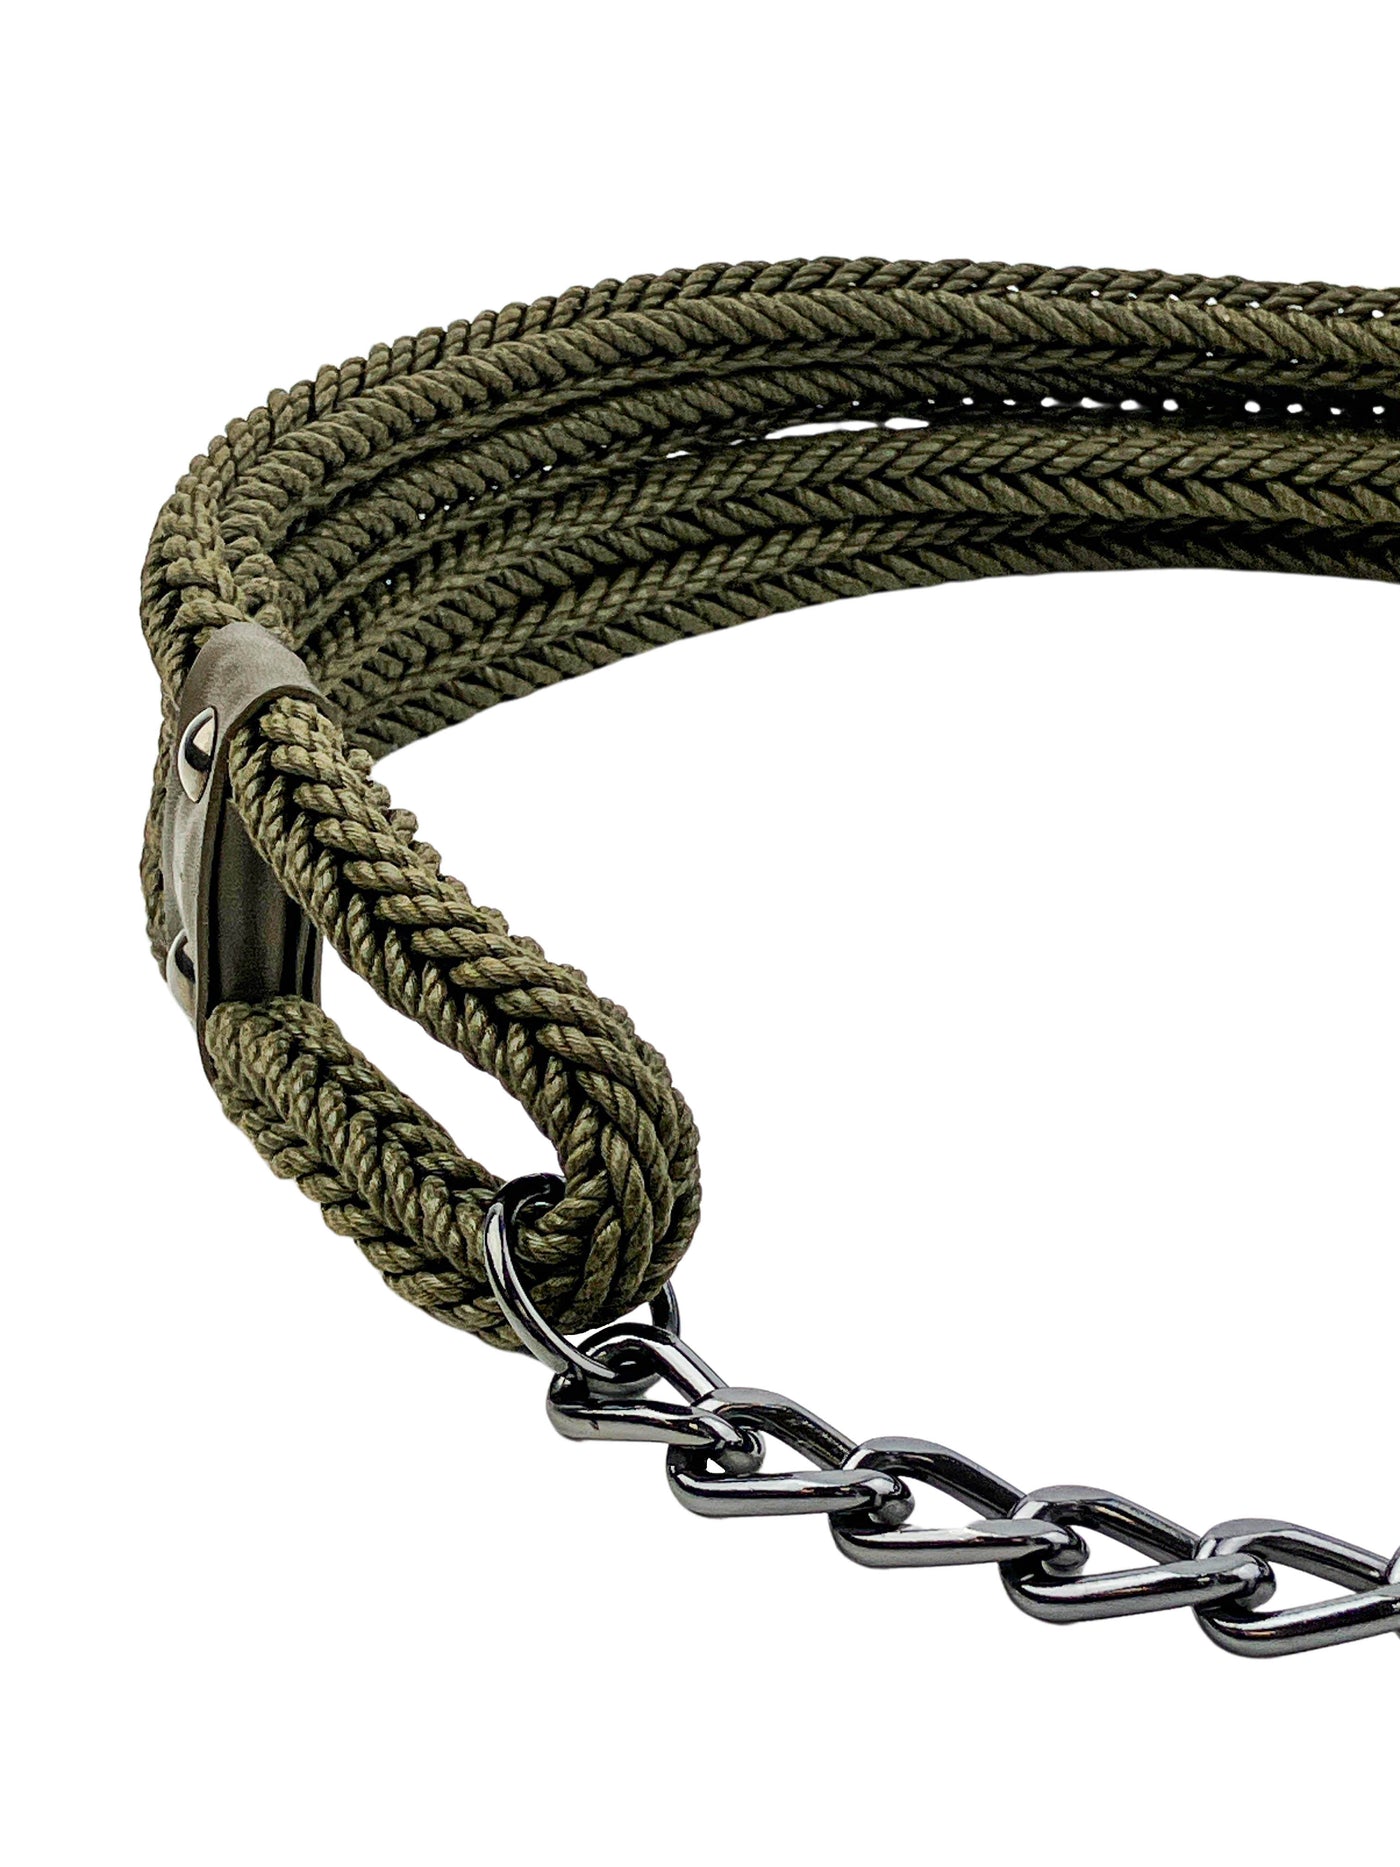 Max Mara Tedesco Braided Belt in Army Green - Discounts on Max Mara at UAL